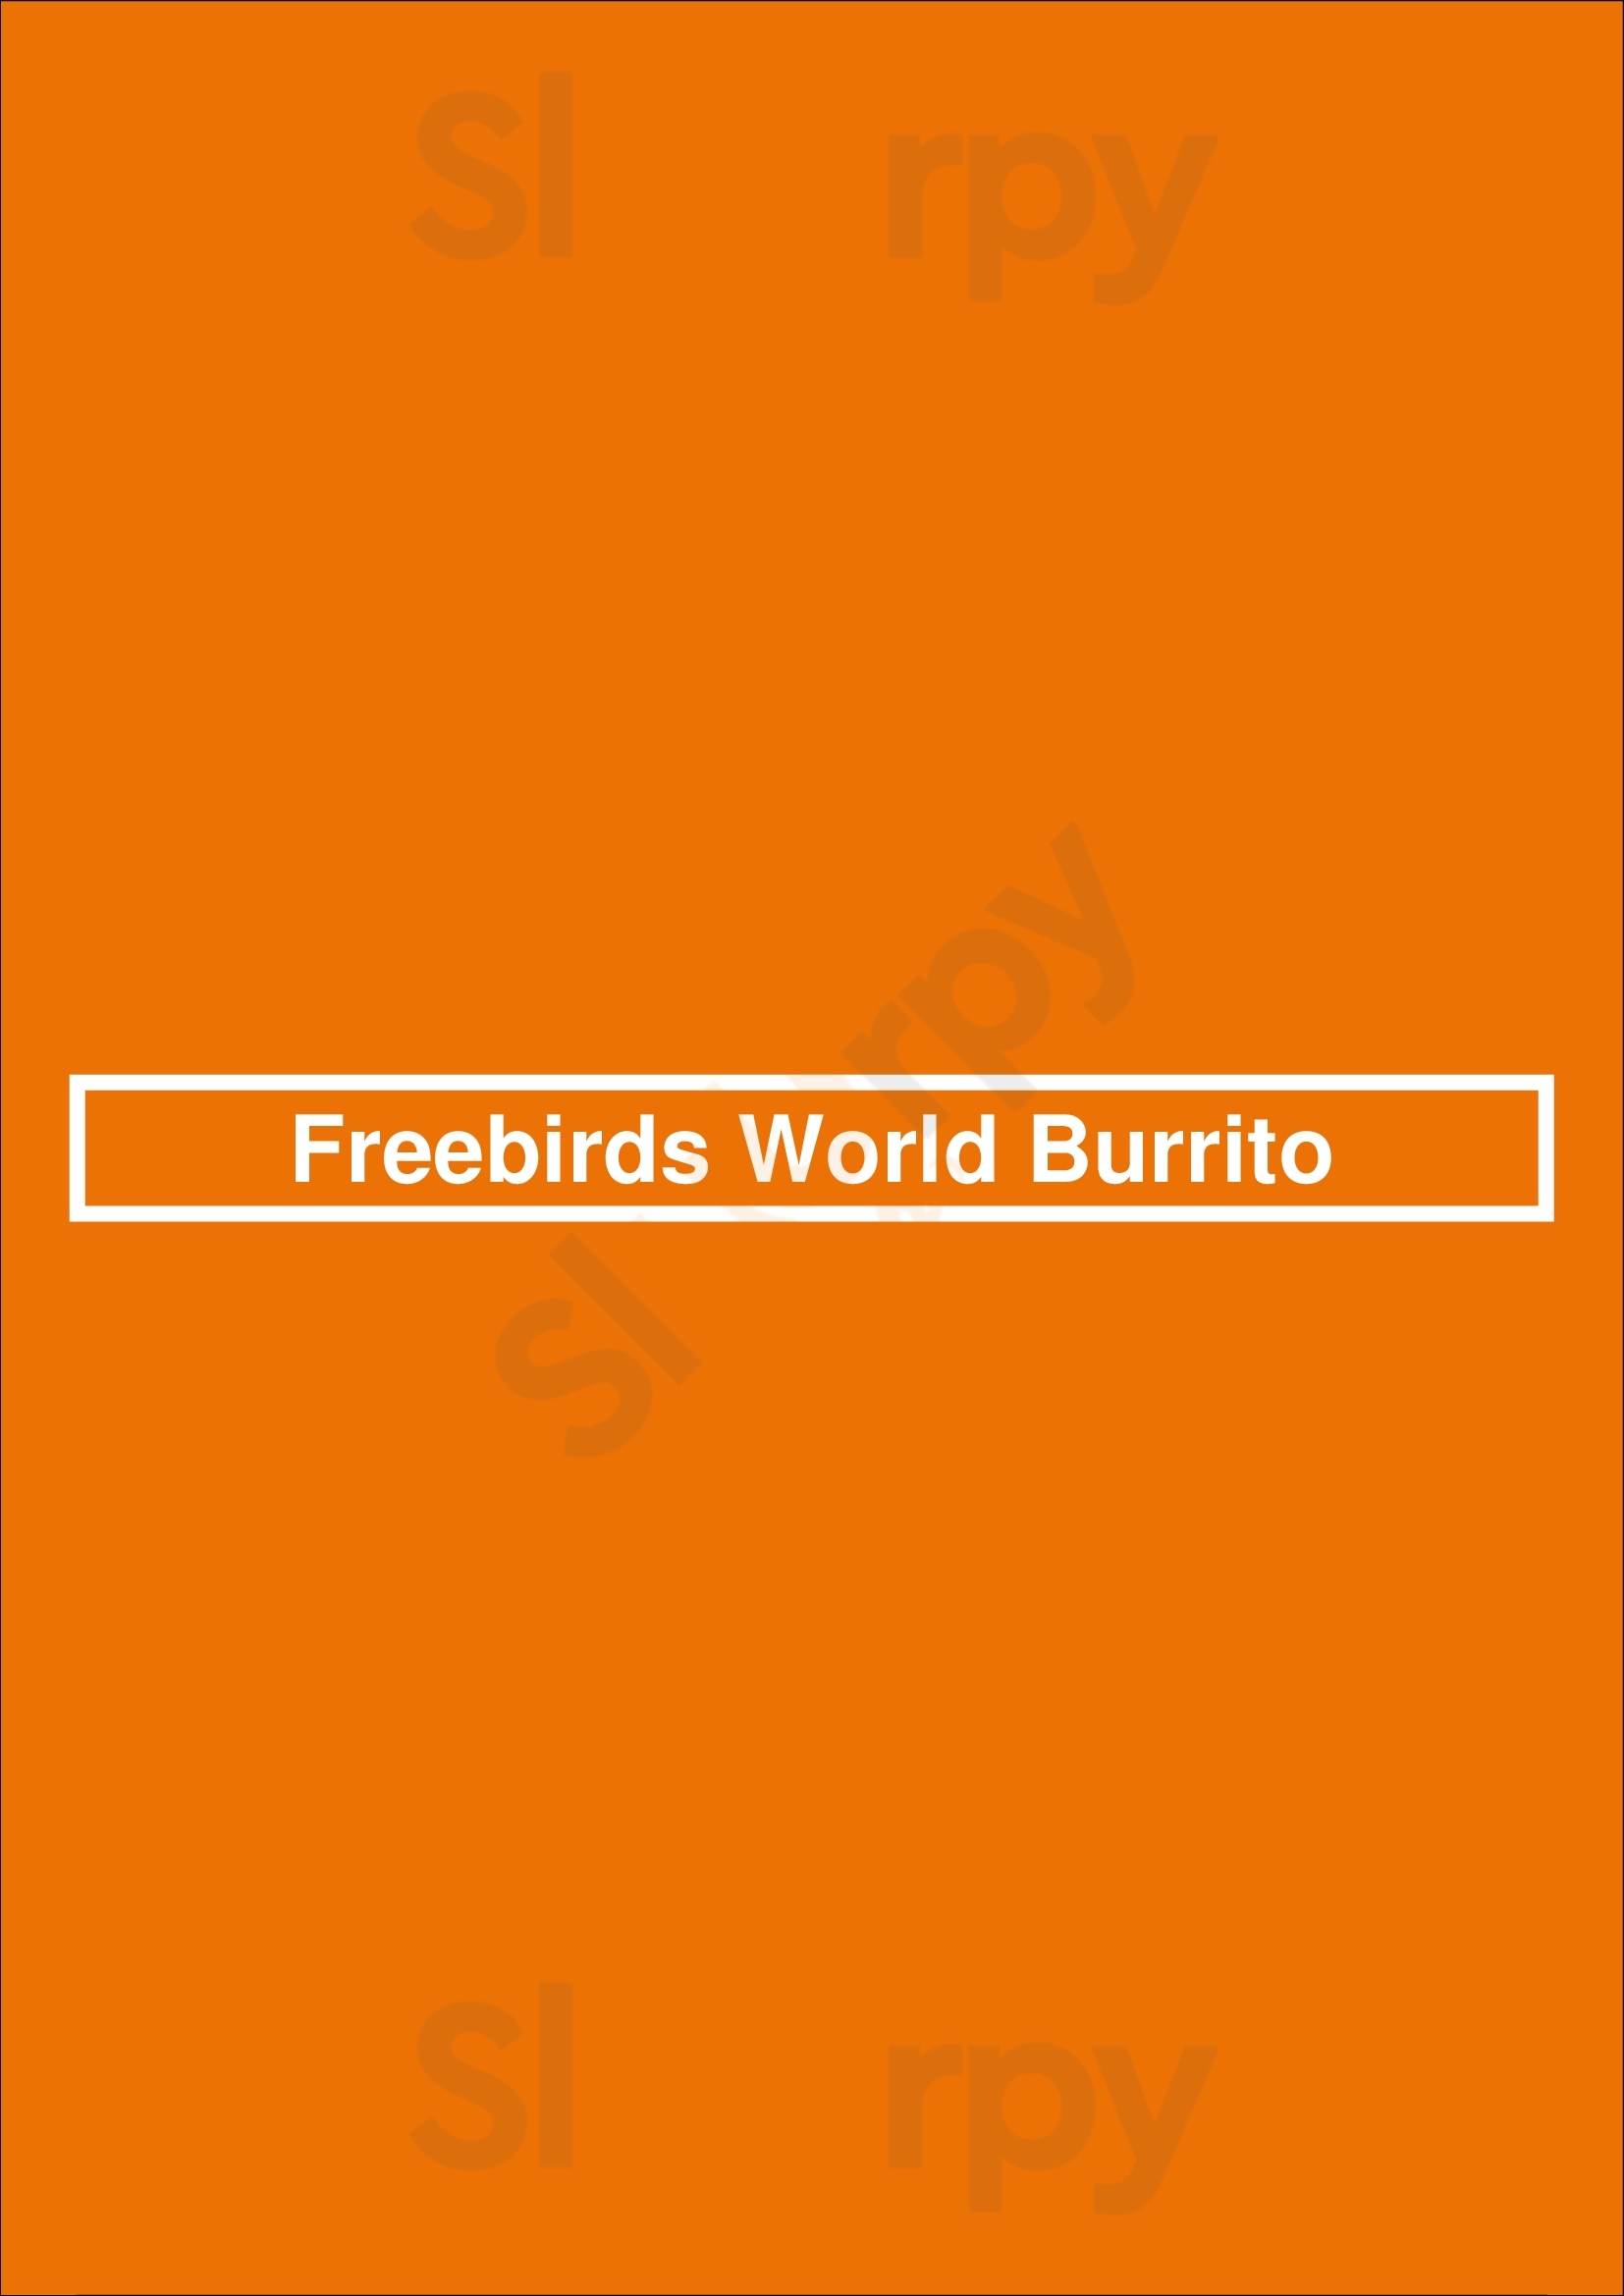 Freebirds World Burrito Houston Menu - 1